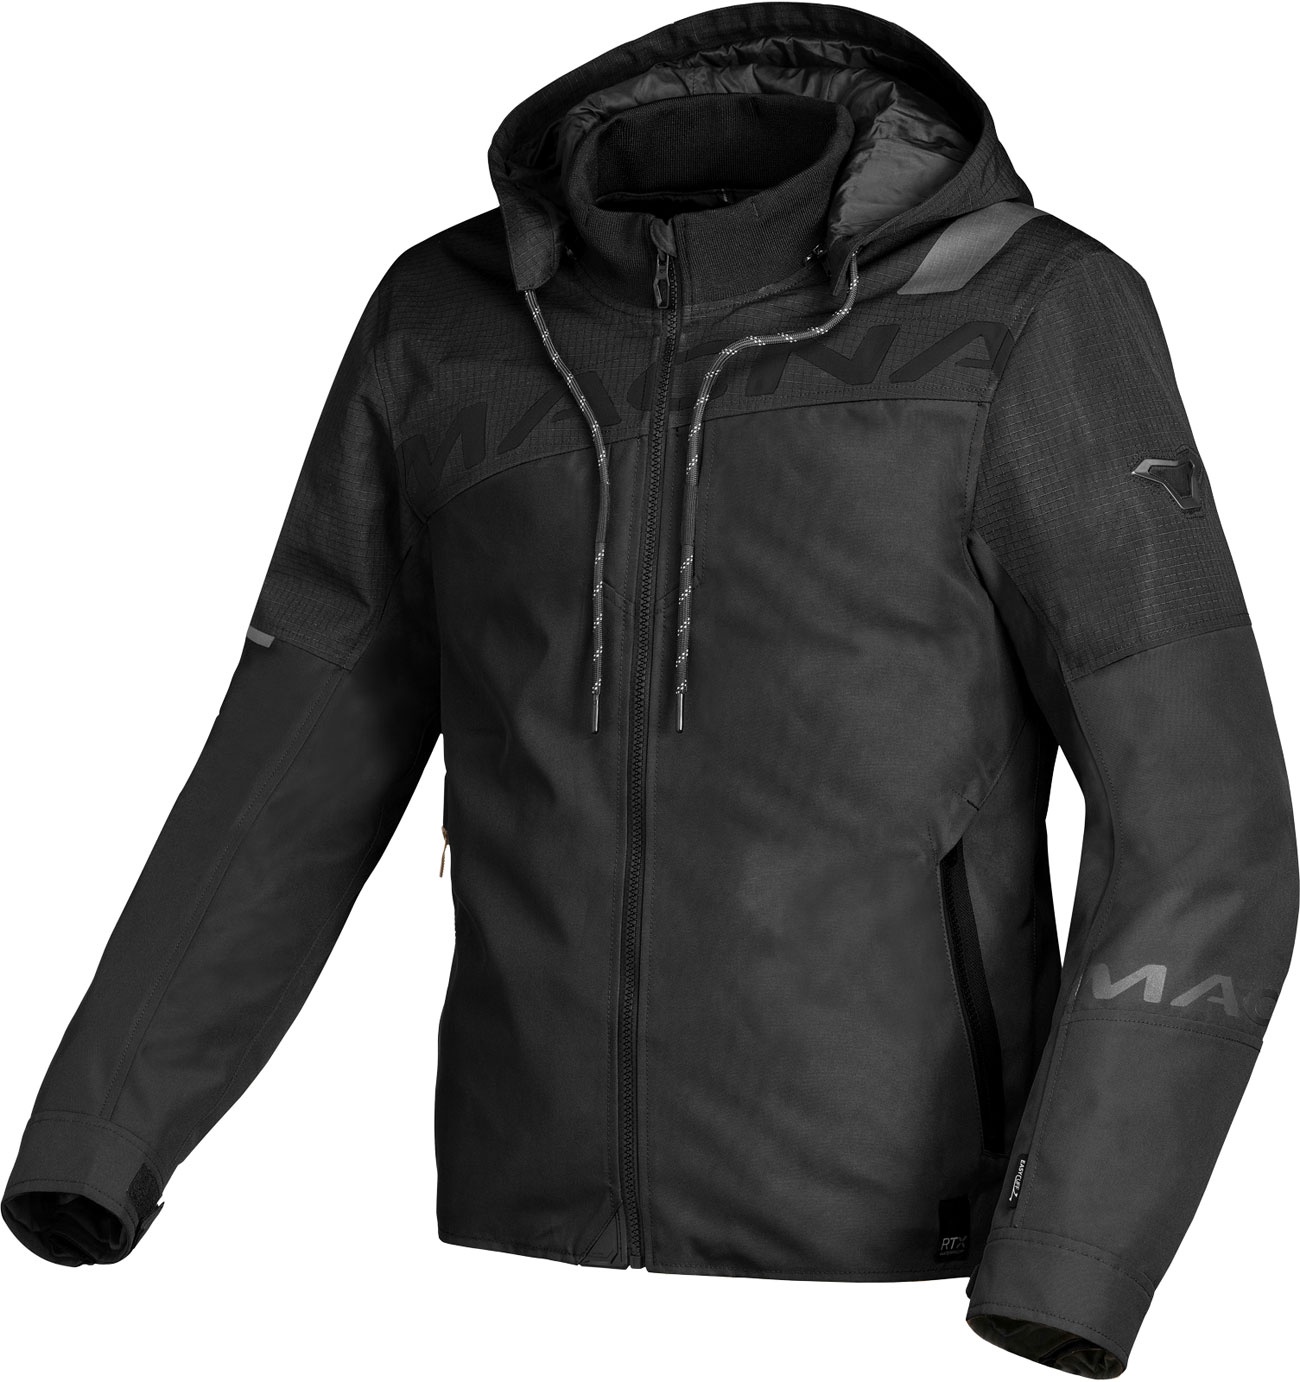 Macna Racoon, veste textile imperméable - Noir - 3XL